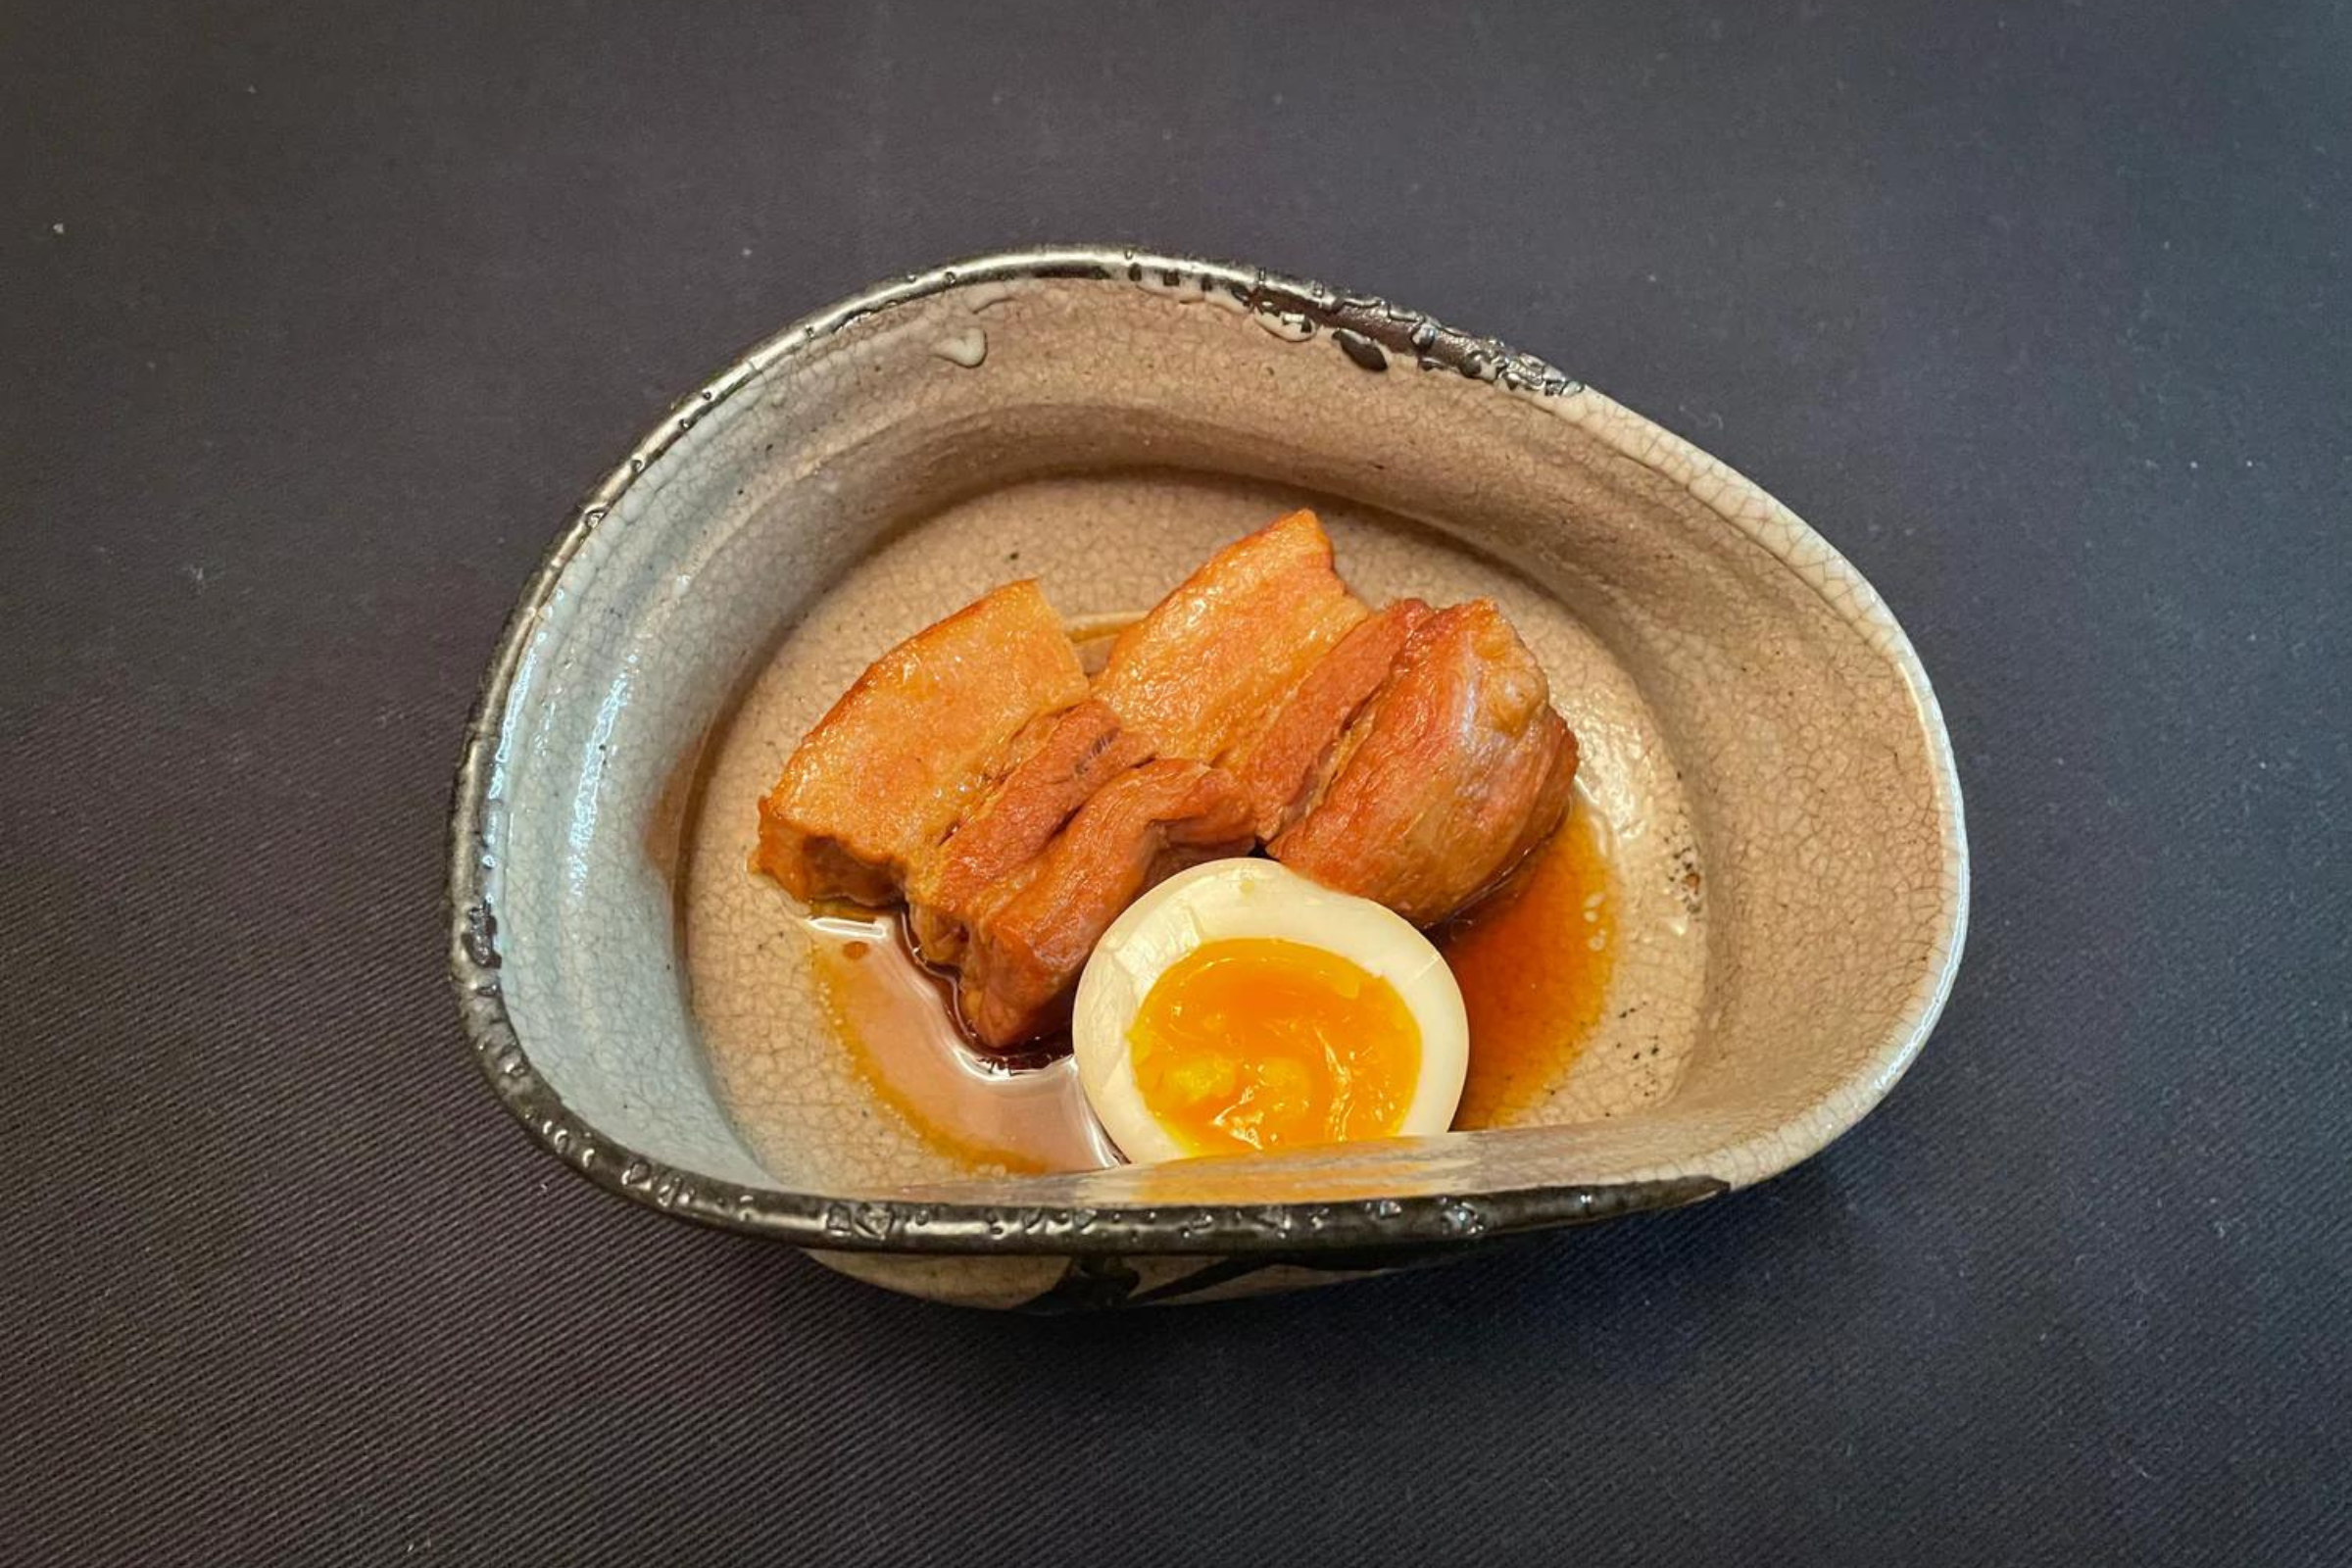 KAKUNI(braised pork belly cut in cubes) by Chef Toru Okuda